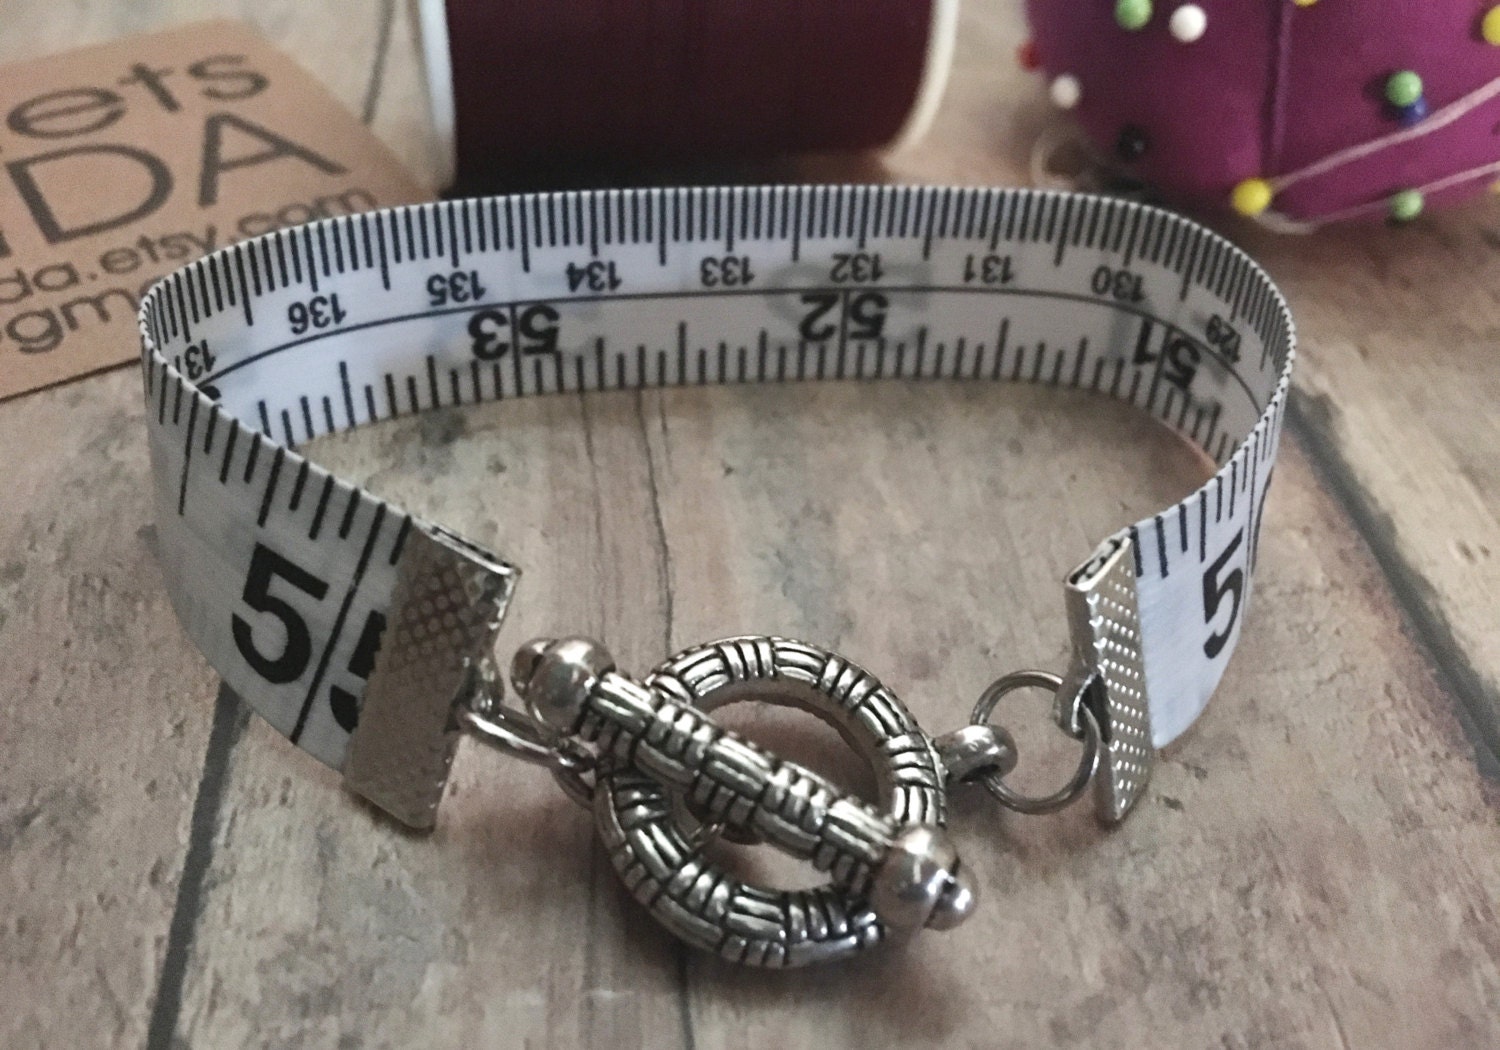 Cloth measuring tape bracelet tutorial